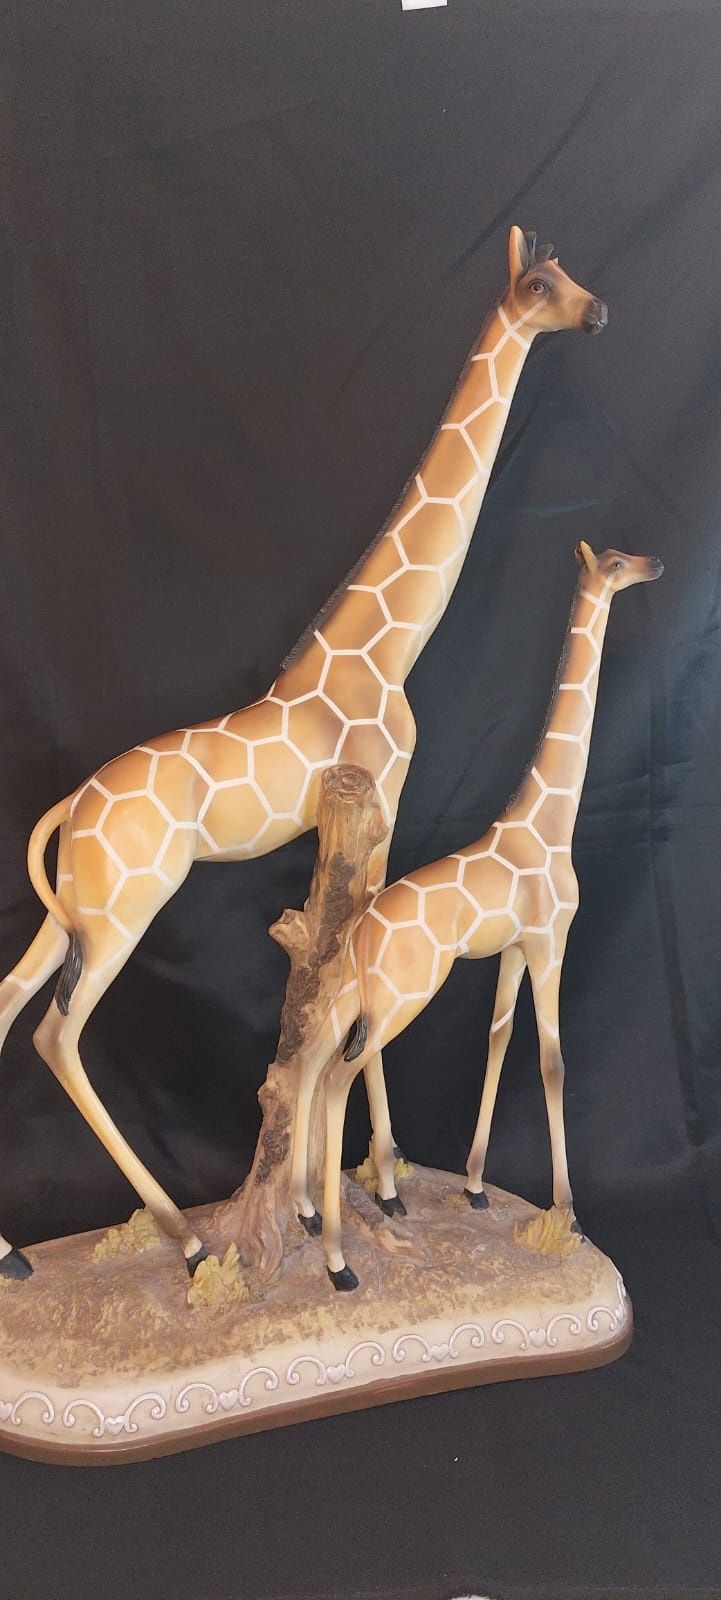 Продам статую жирафа